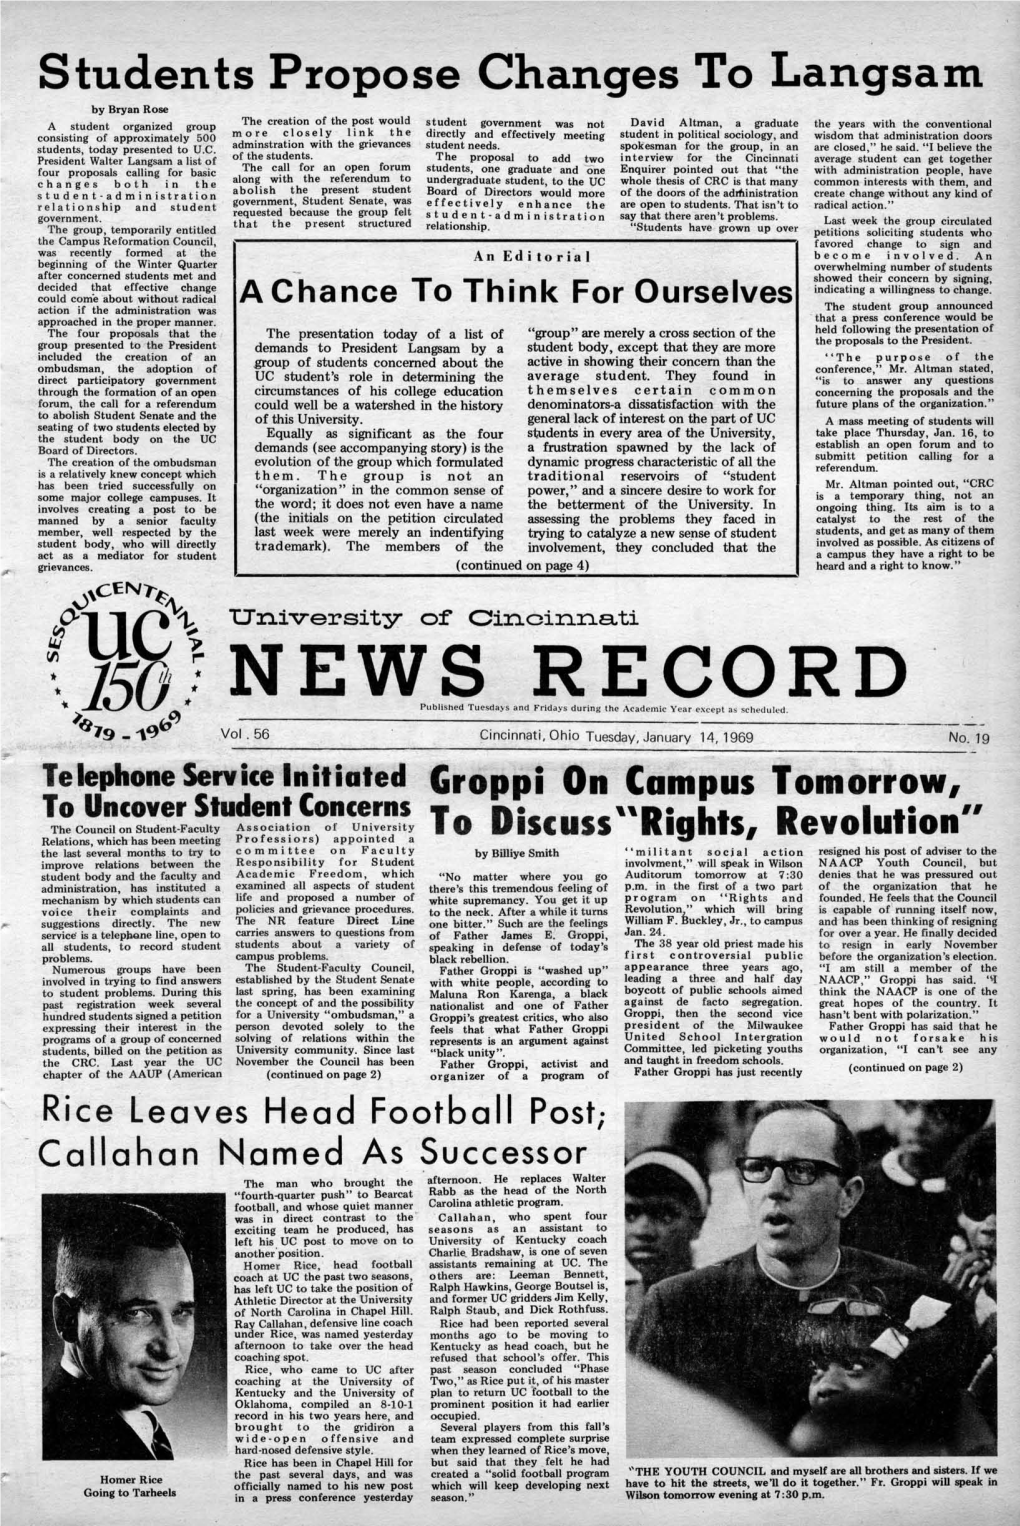 University of Cincinnati News Record. Tuesday, January 14, 1969. Vol